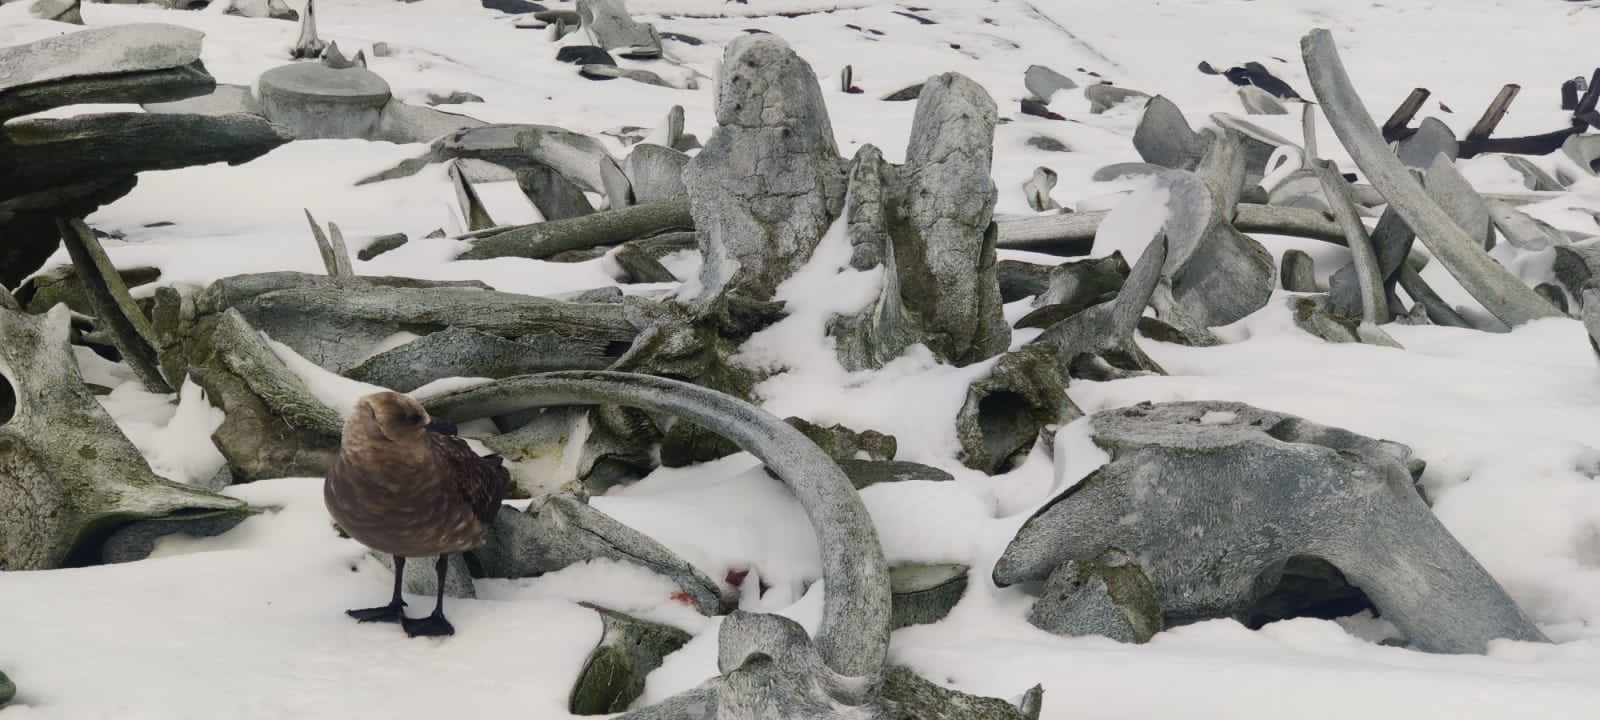 Dead whales in Antarctica 